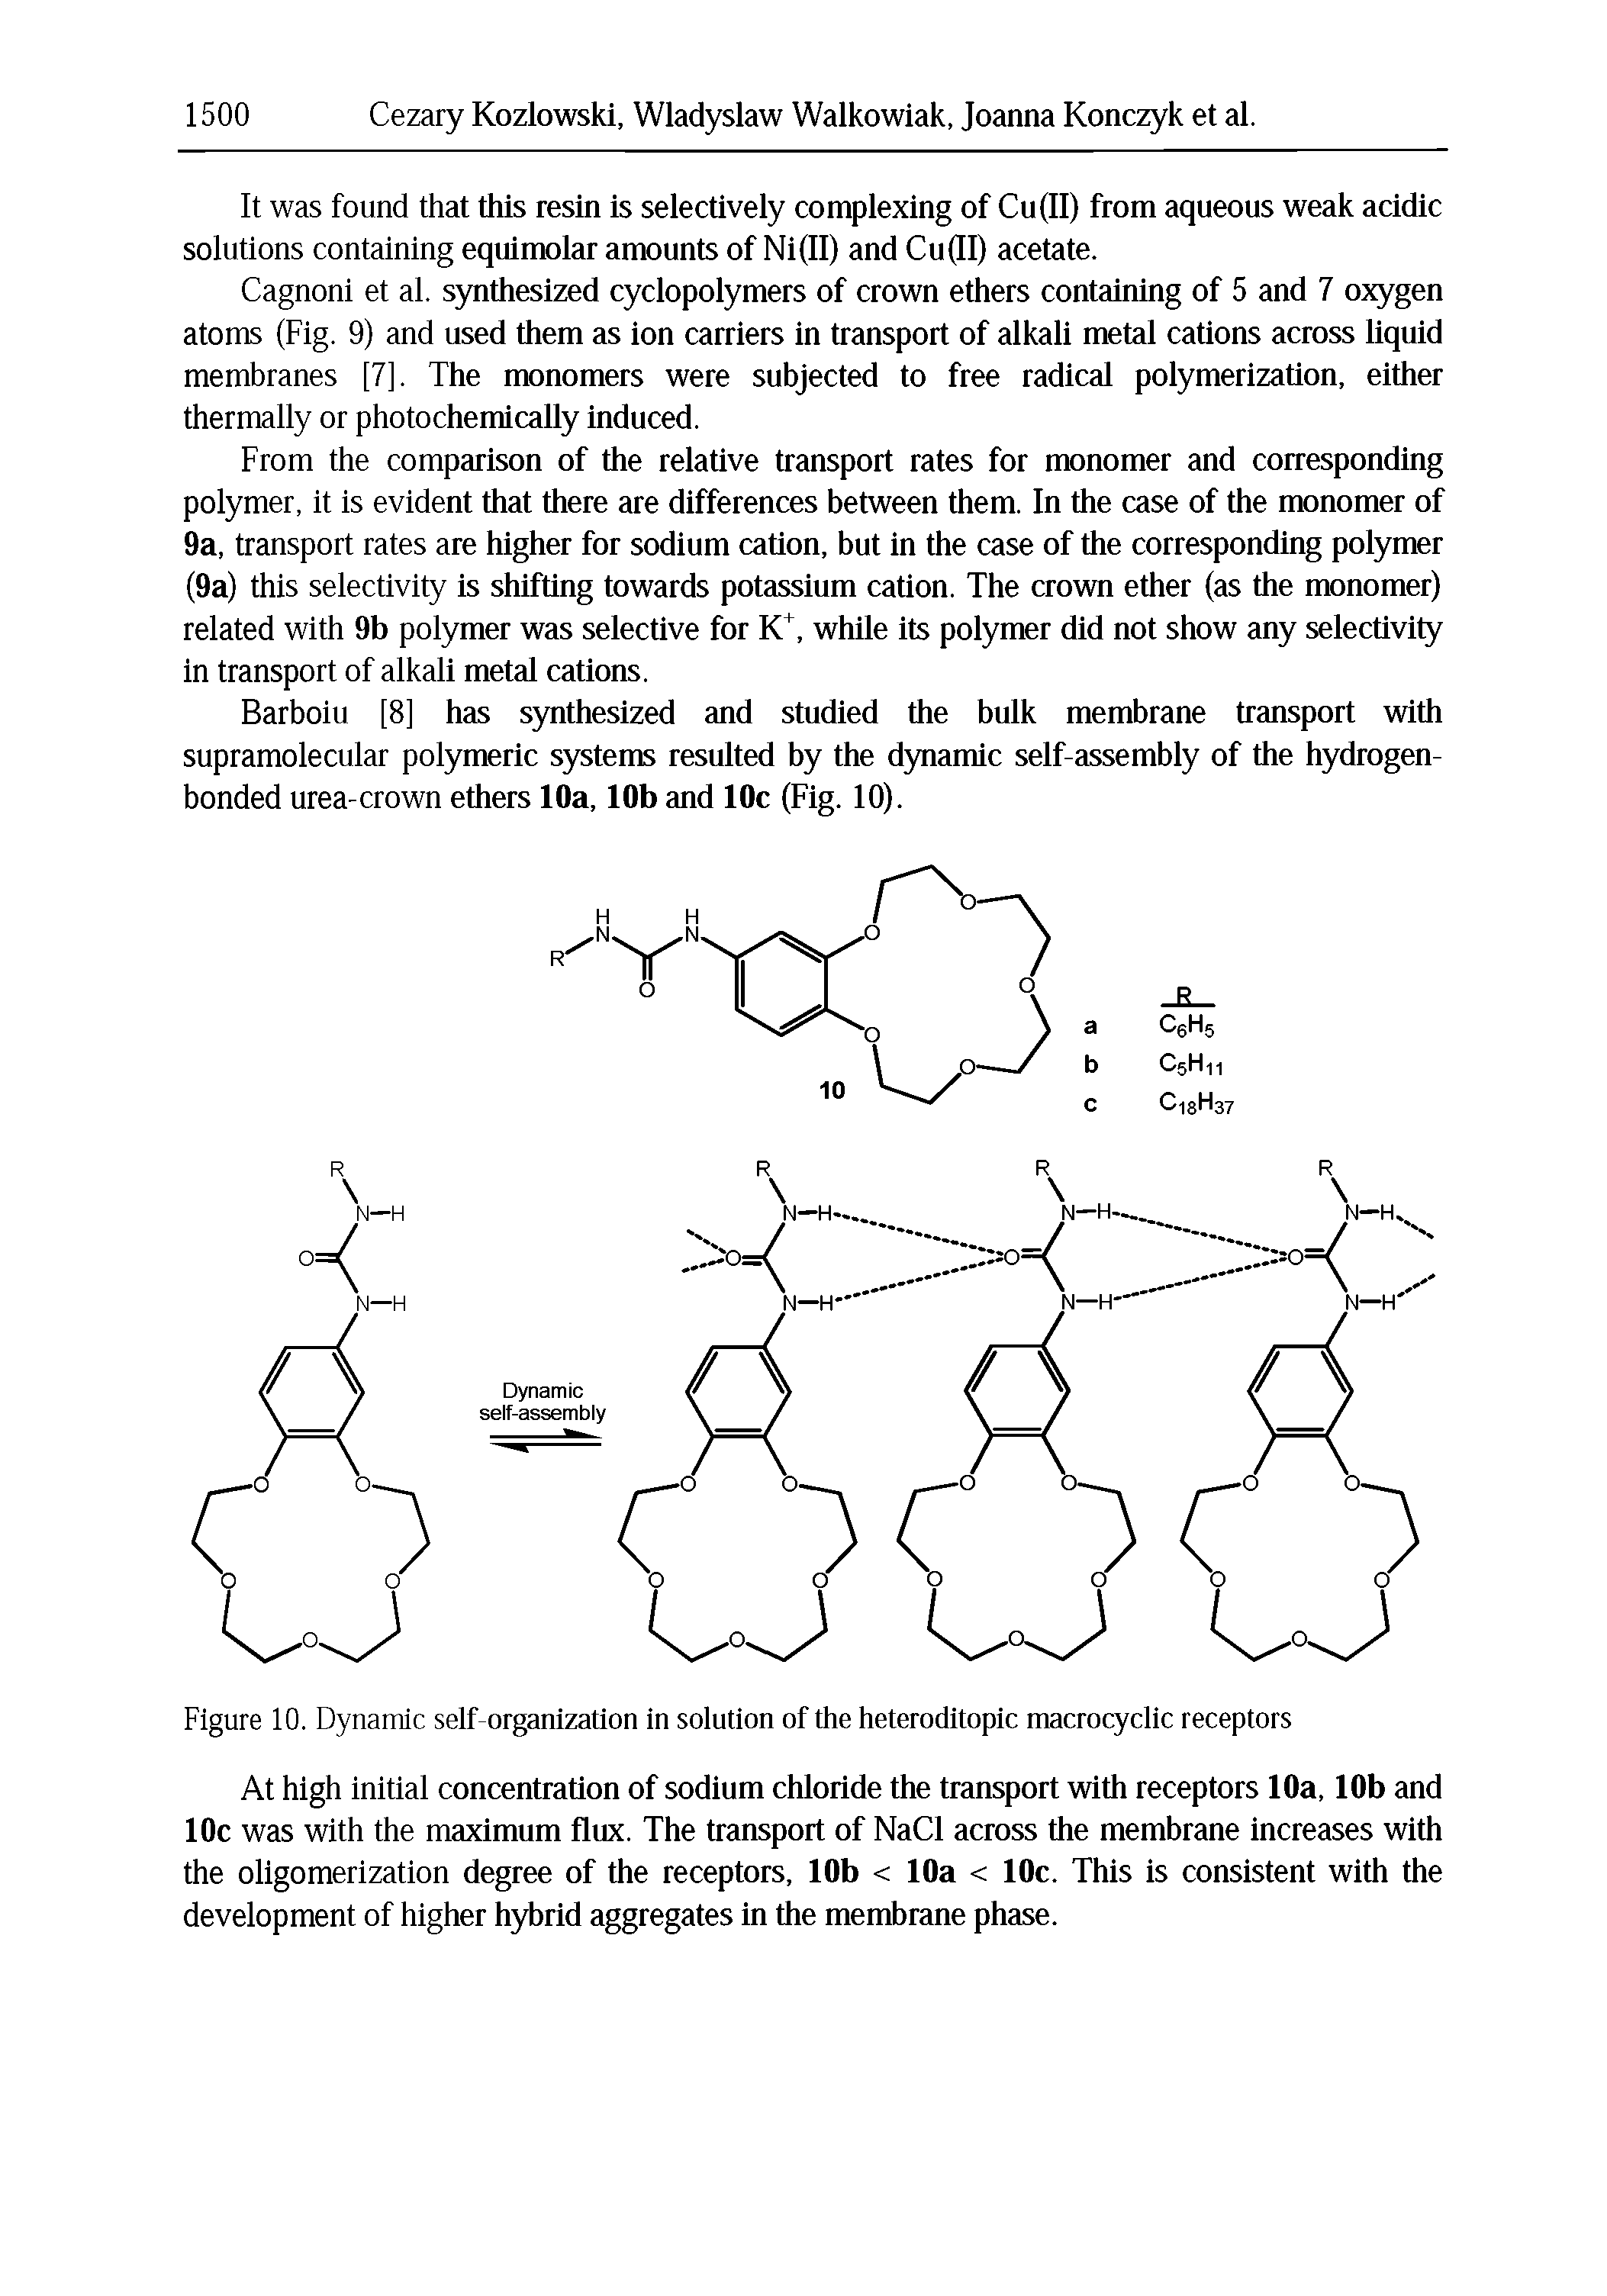 Figure 10. Dynamic self-organization in solution of the heteroditoplc macrocyclic receptors...